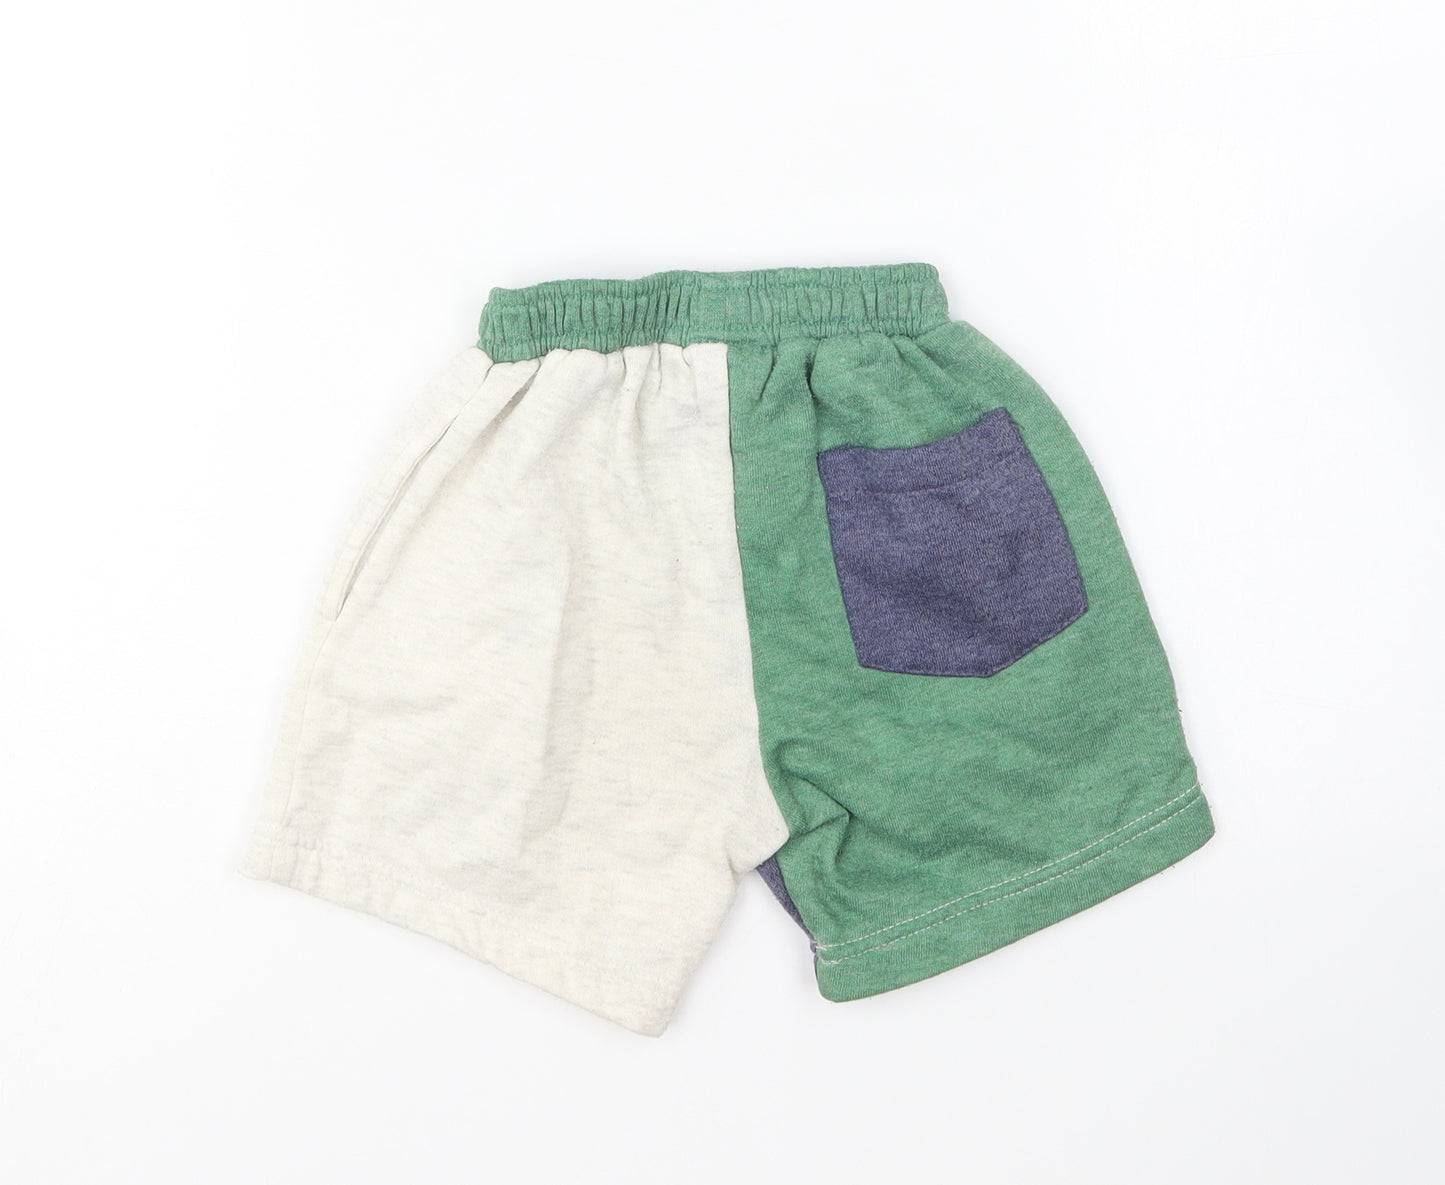 Respekt Clothing Boys Multicoloured Cotton Sweat Shorts Size 2-3 Years Regular